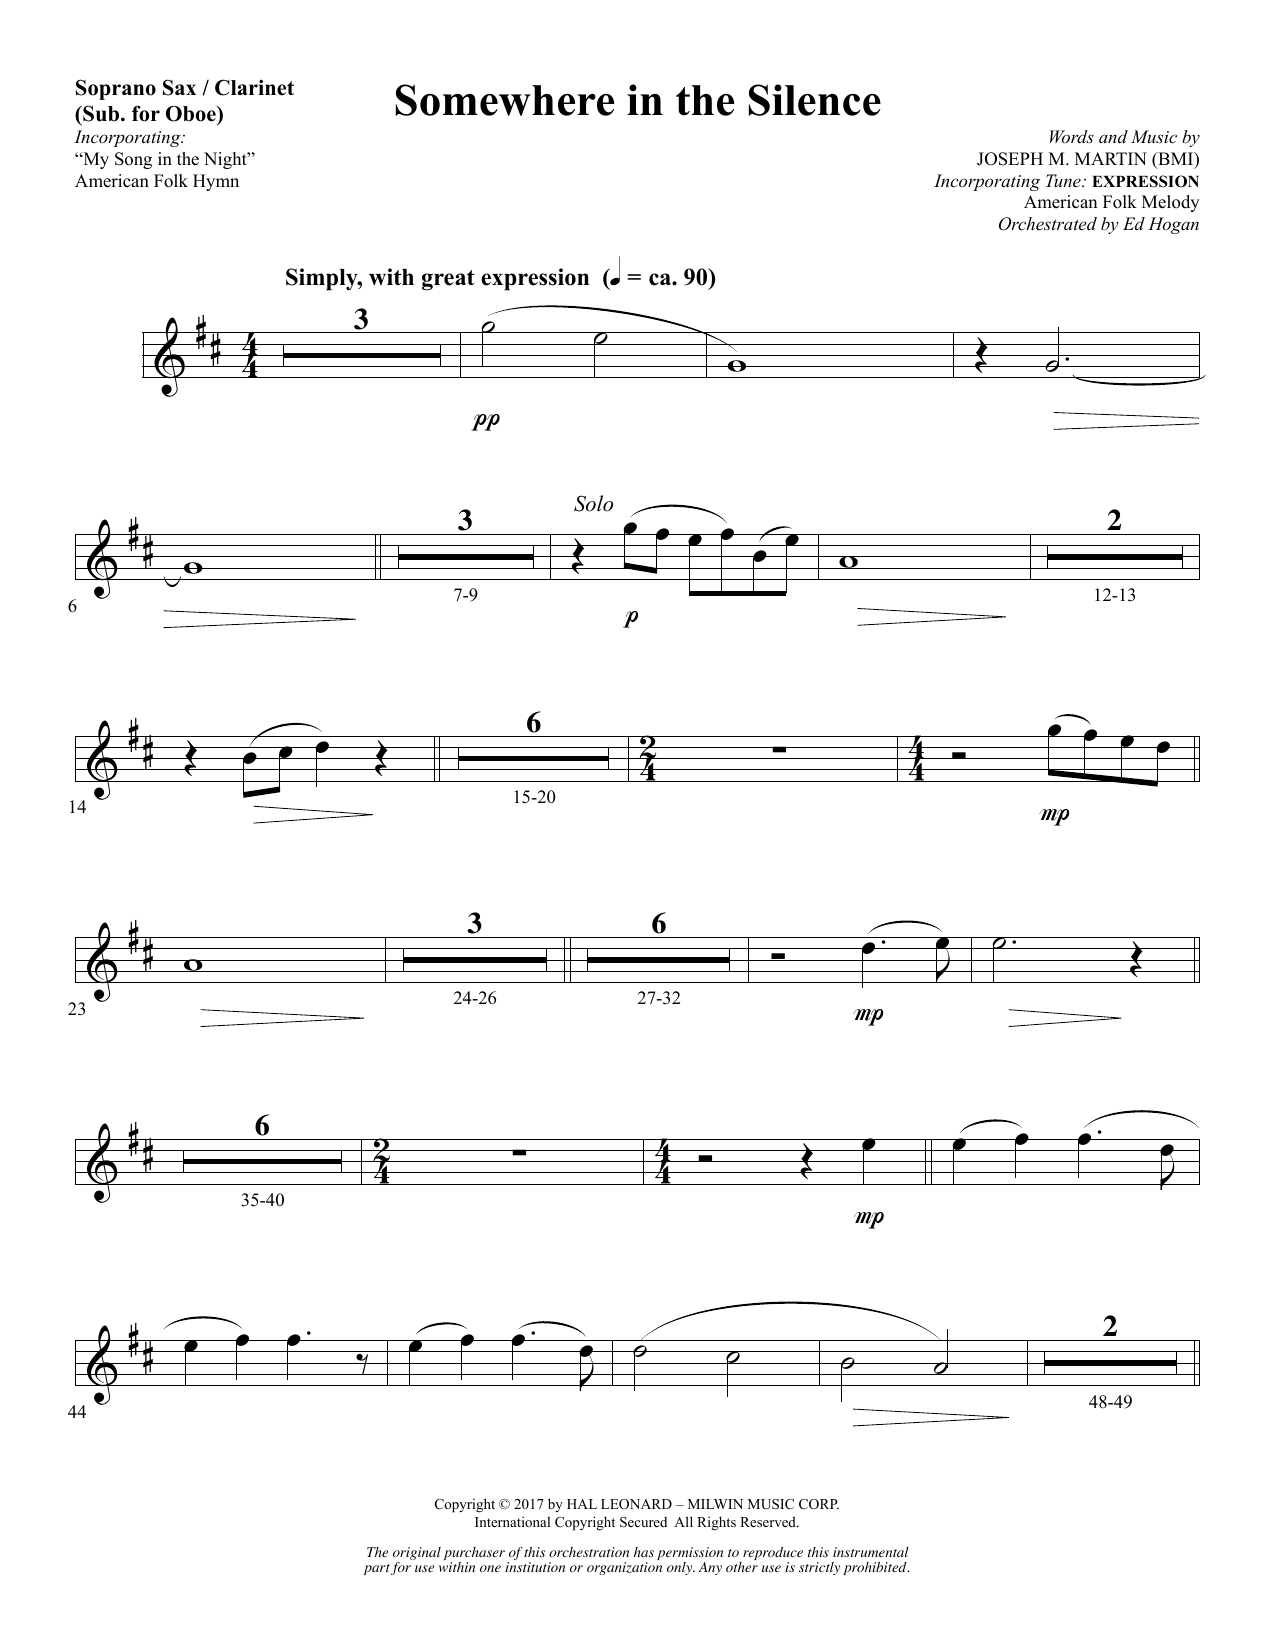 Download Joseph M. Martin Somewhere in the Silence - Soprano Sax/ Sheet Music